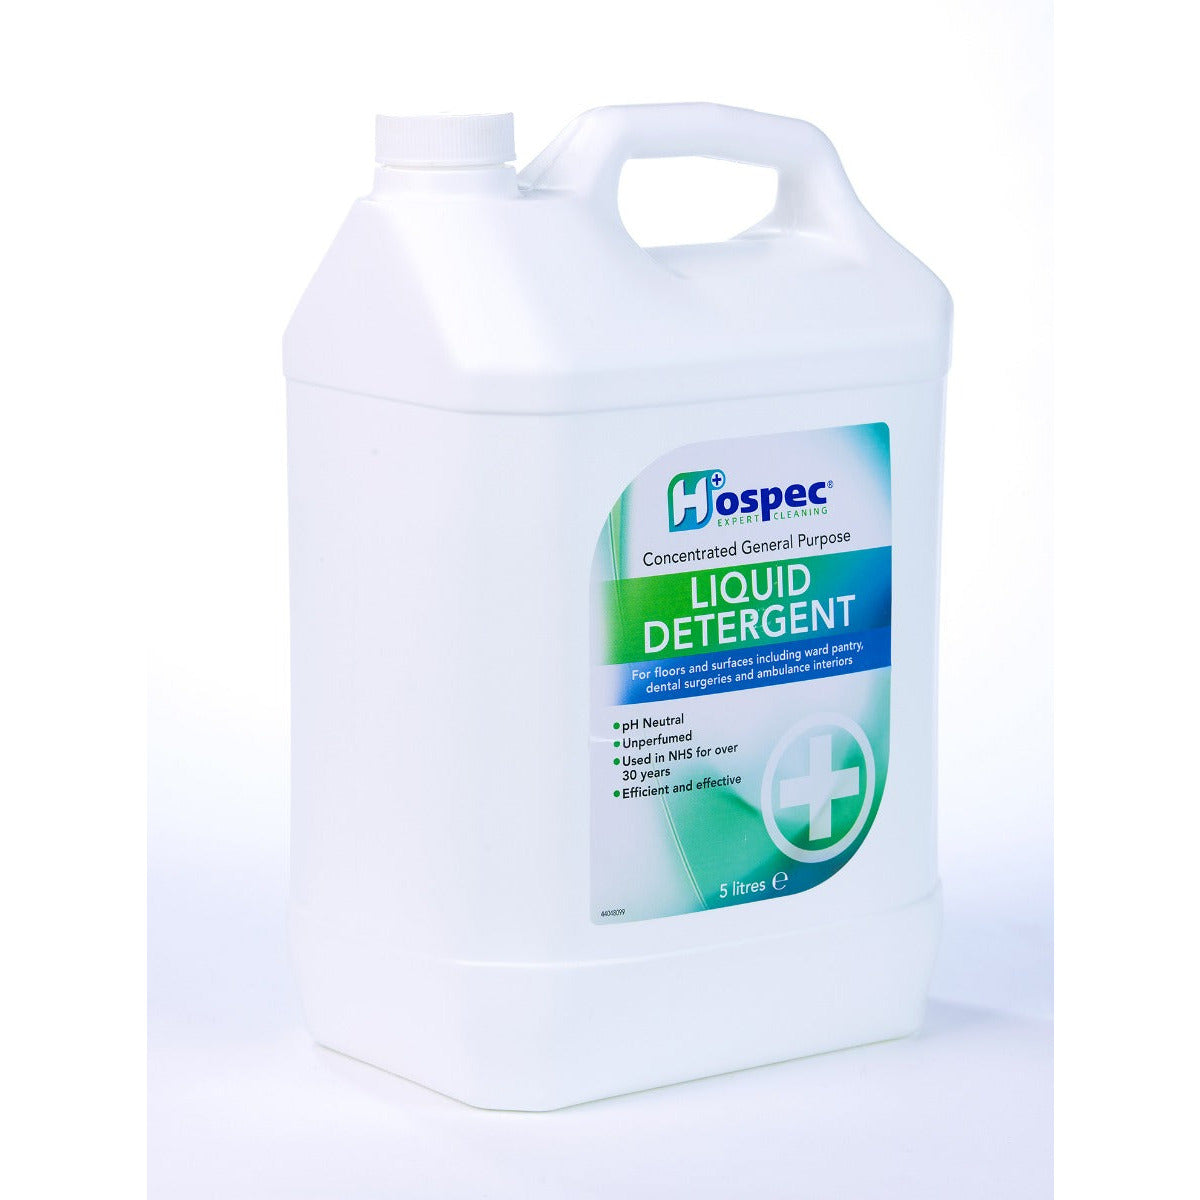 Hospec Liquid Detergent 5 Litre - pH Neutral x 1